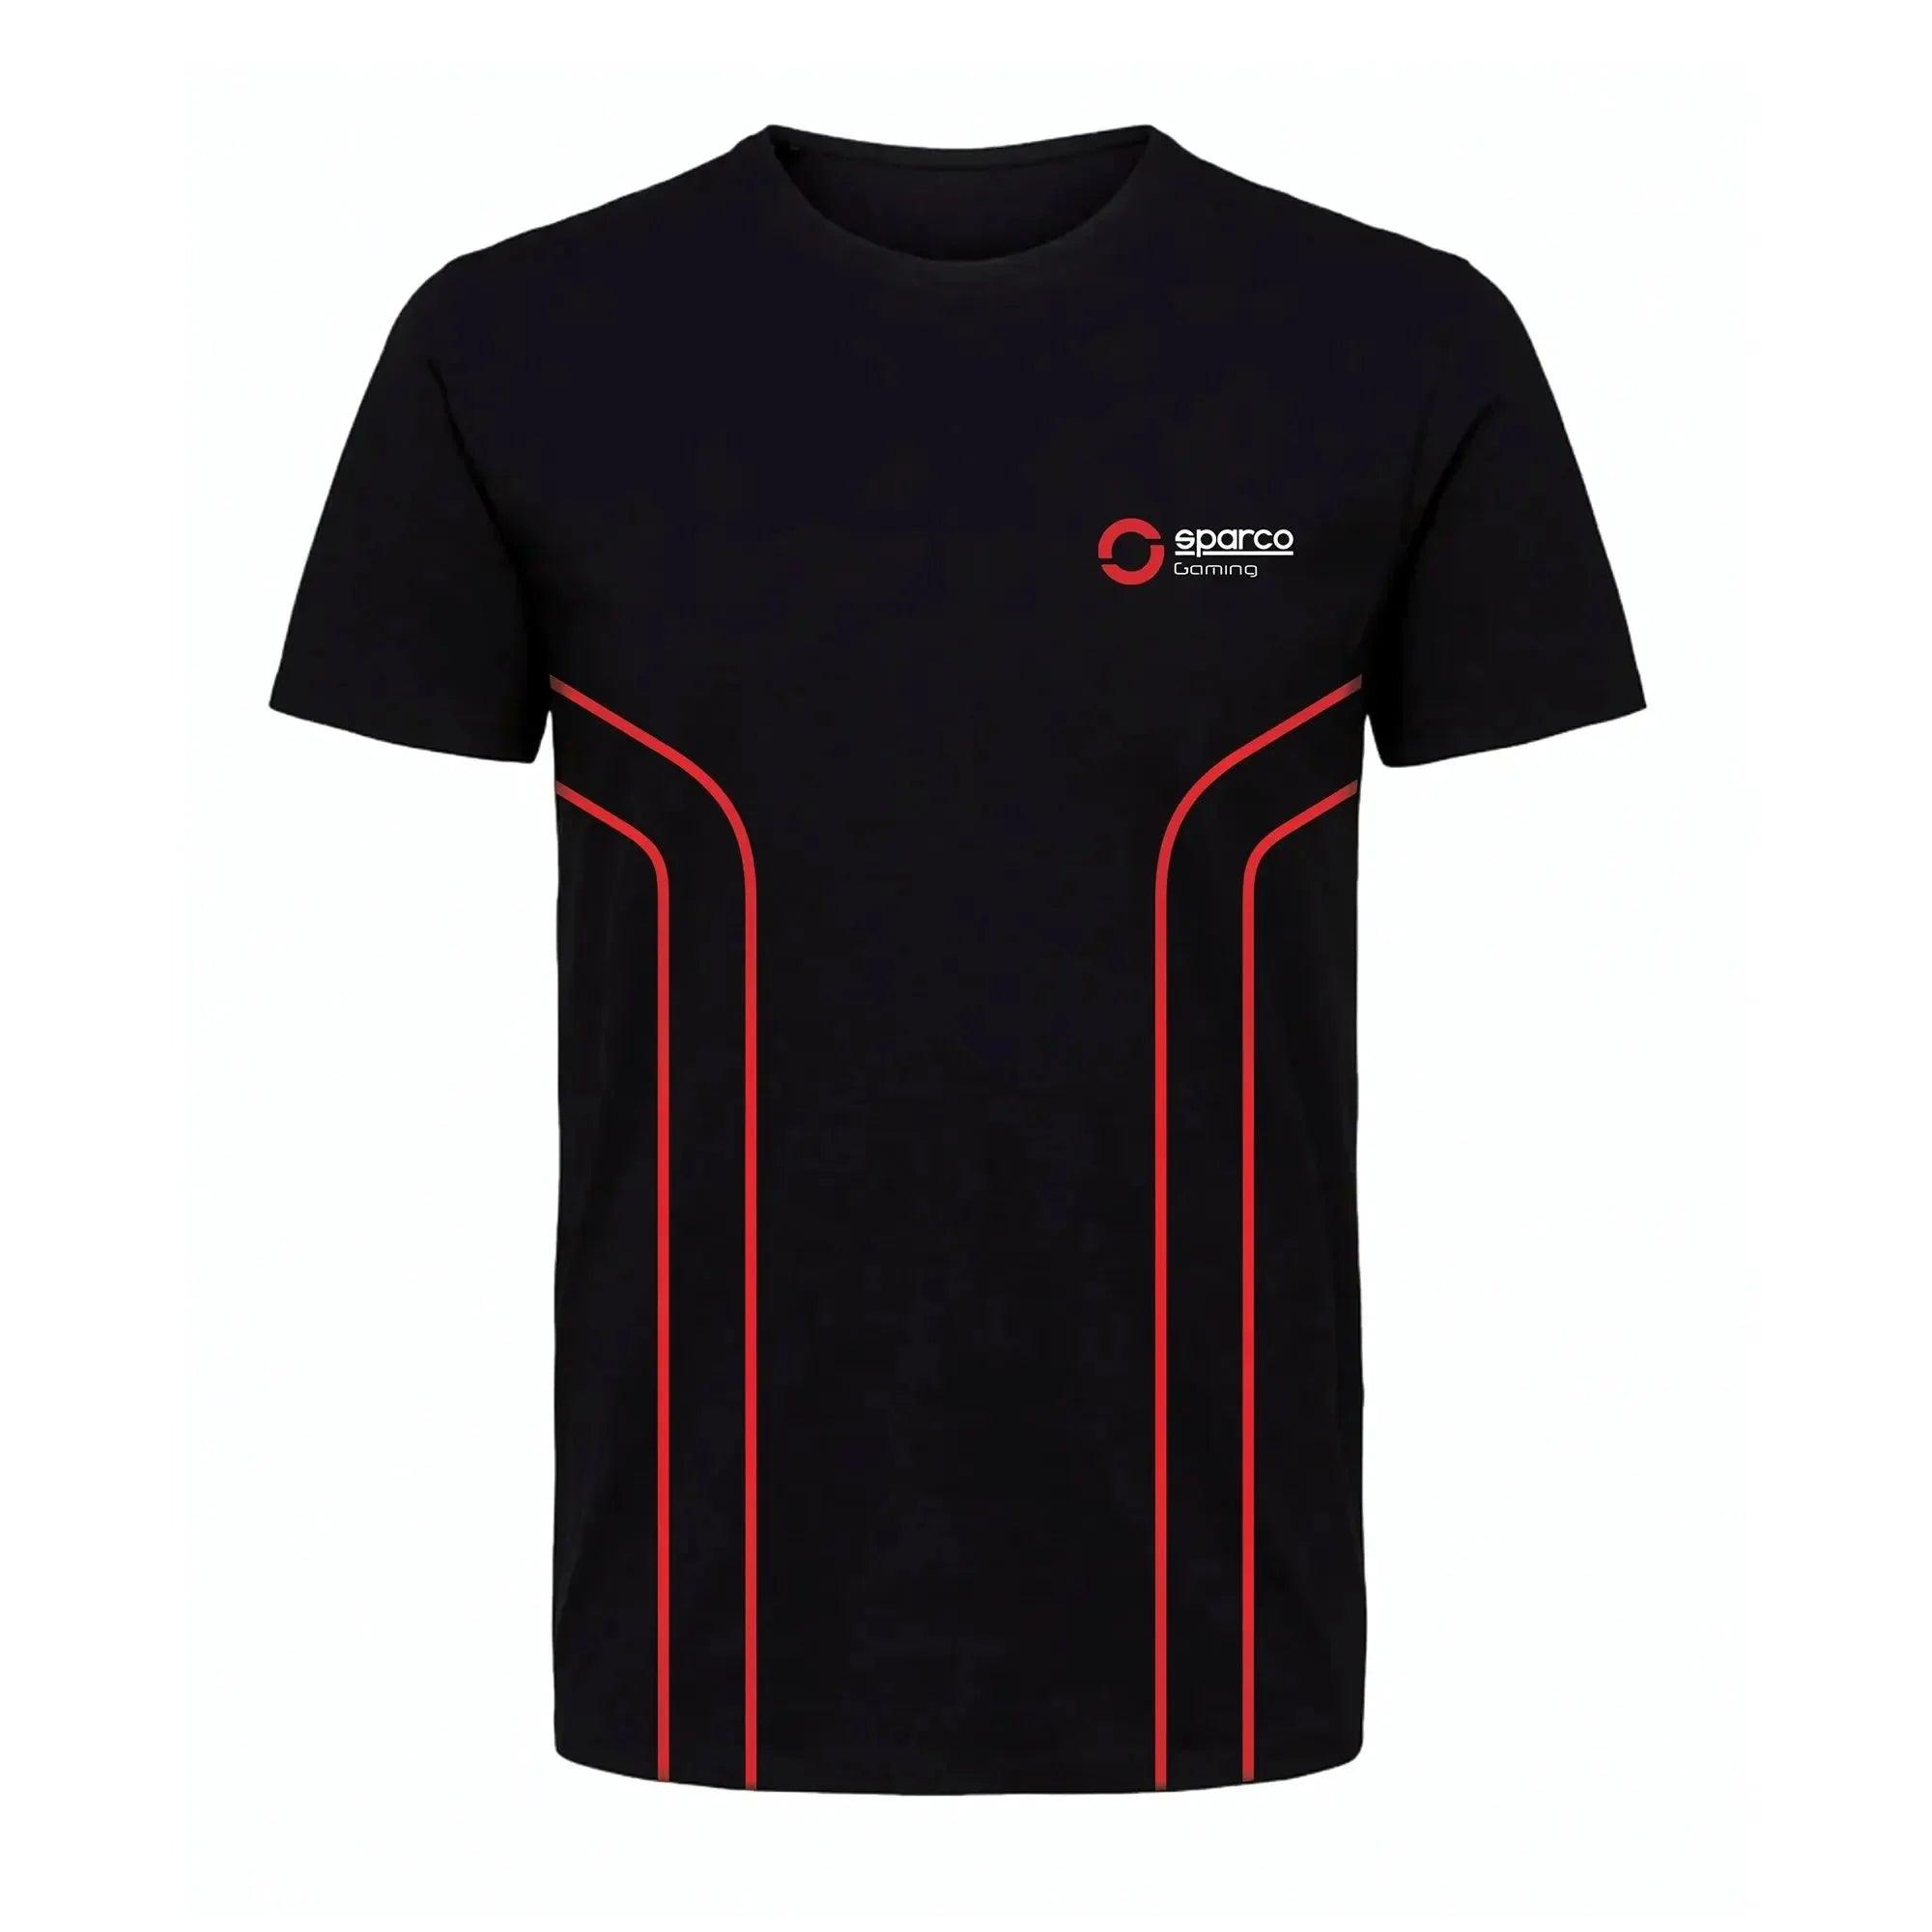 Sparco Gaming T-Shirt New desinged - Dash Racegear 